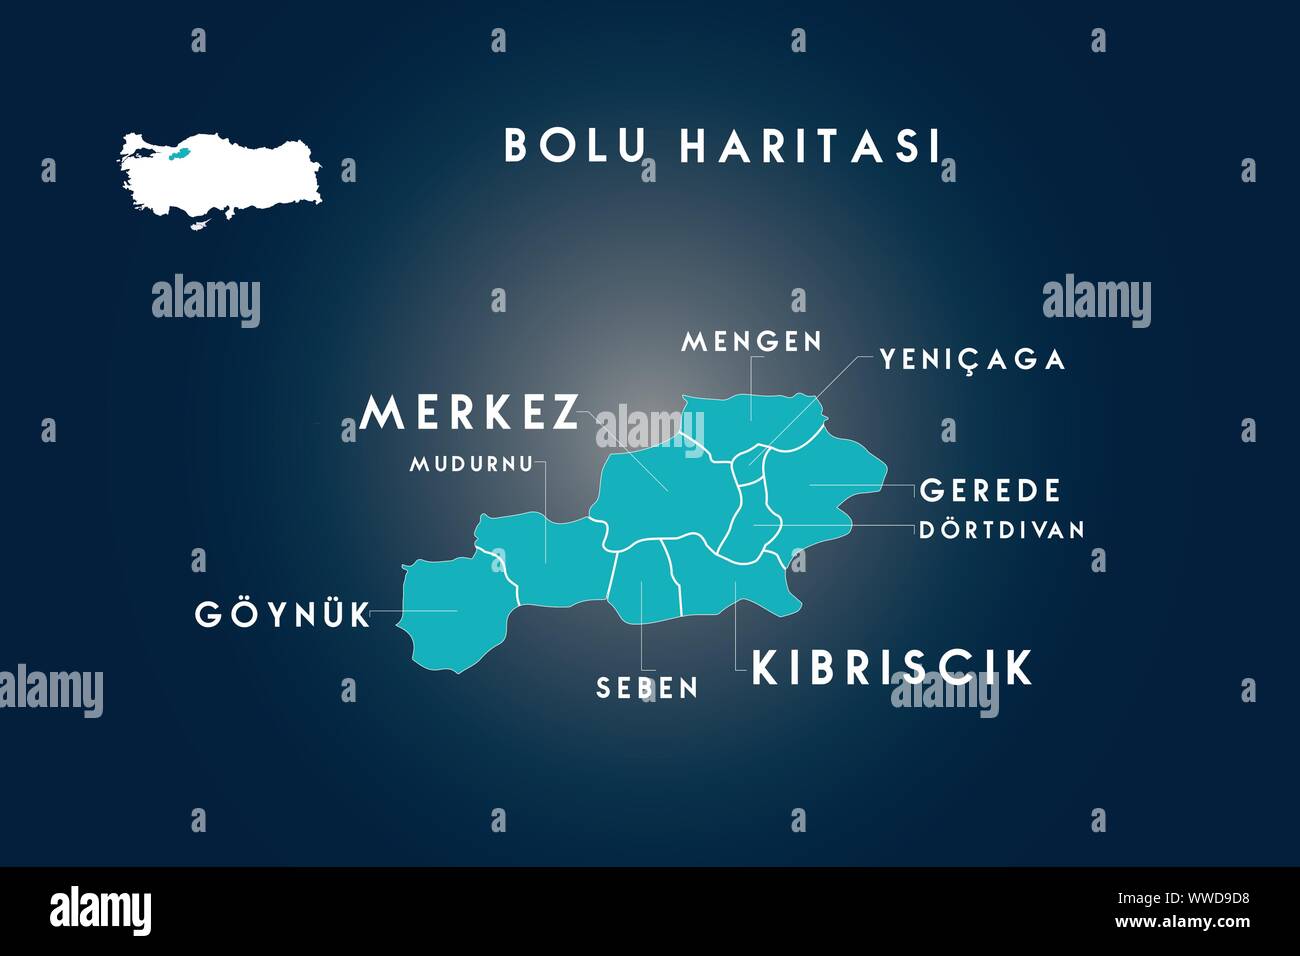 Bolu districts mudurnu, goynuk, seben, kibriscik, dortdivan, gerede, yenicaga, mengen map, Turkey Stock Vector